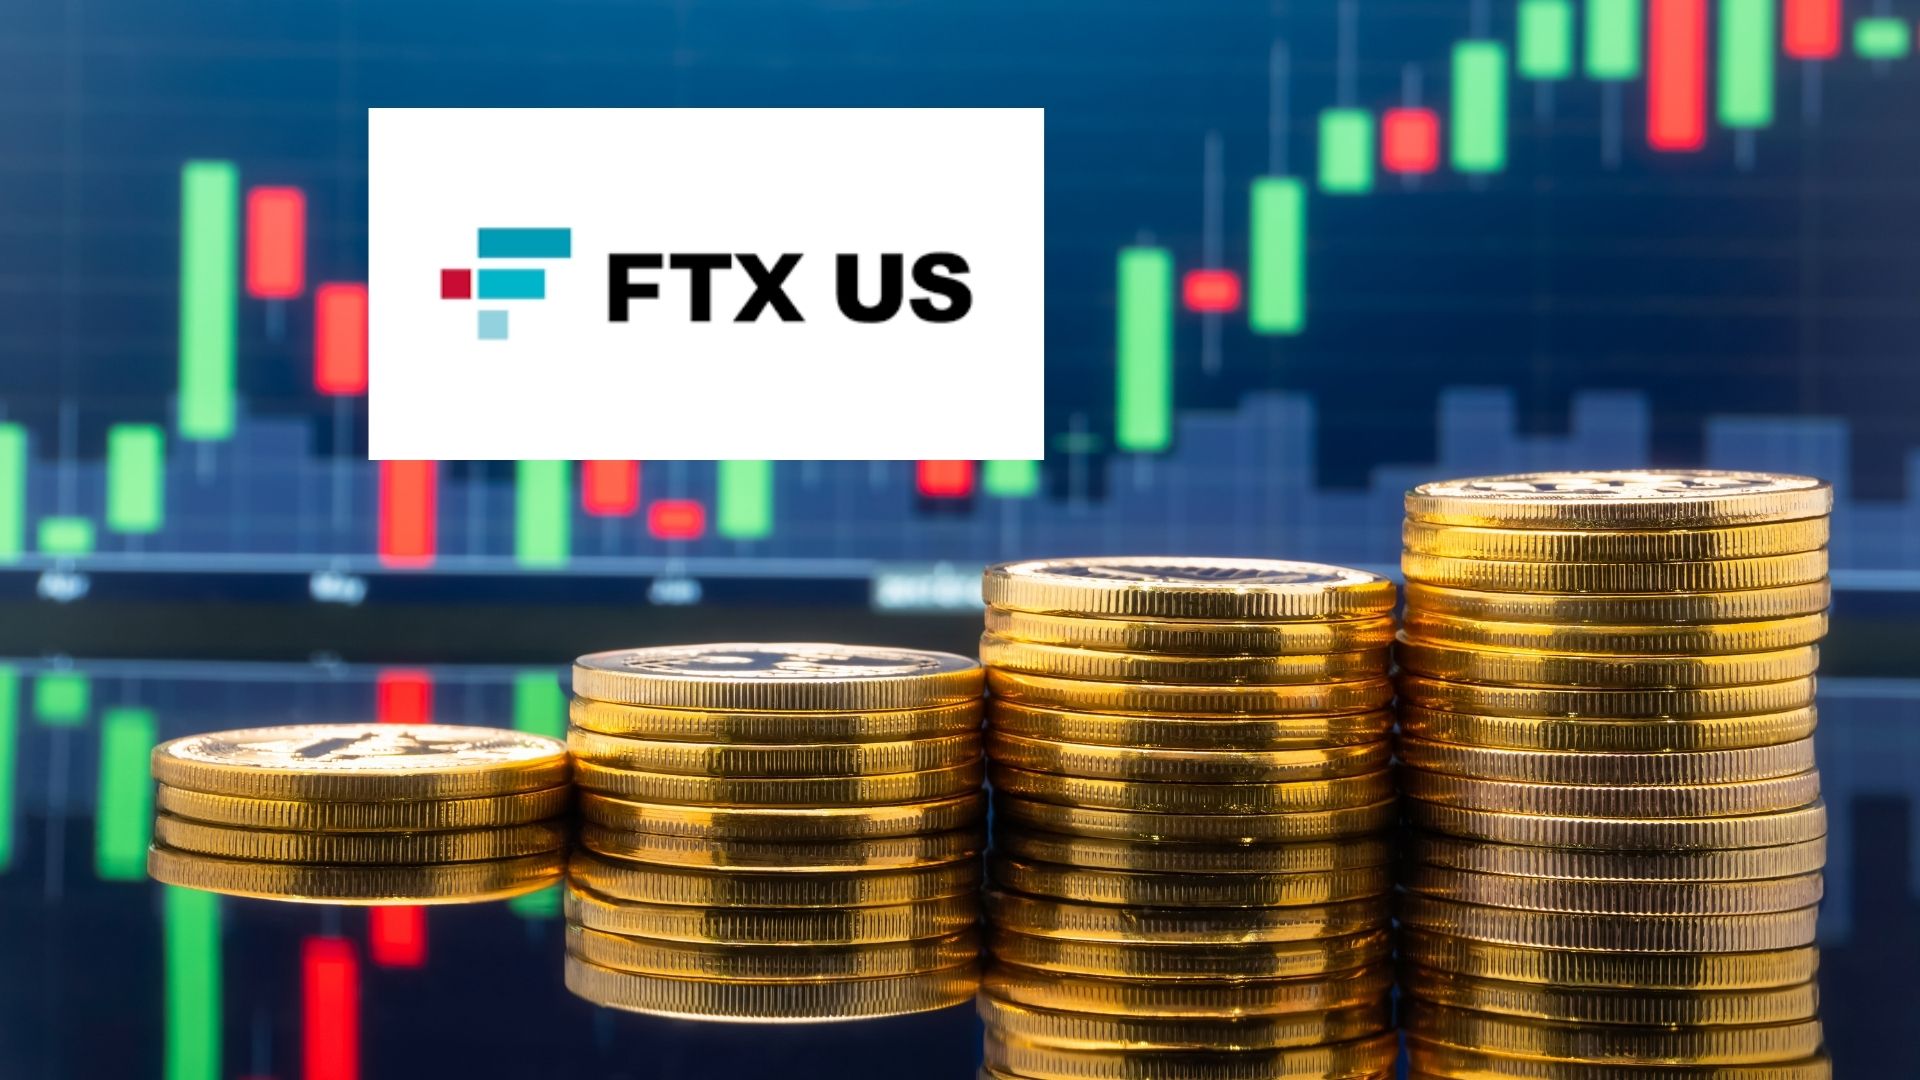 FTXUS - صرافی FTX یک بازار سرگرمی و ورزشی مبتنی بر NFT می سازد